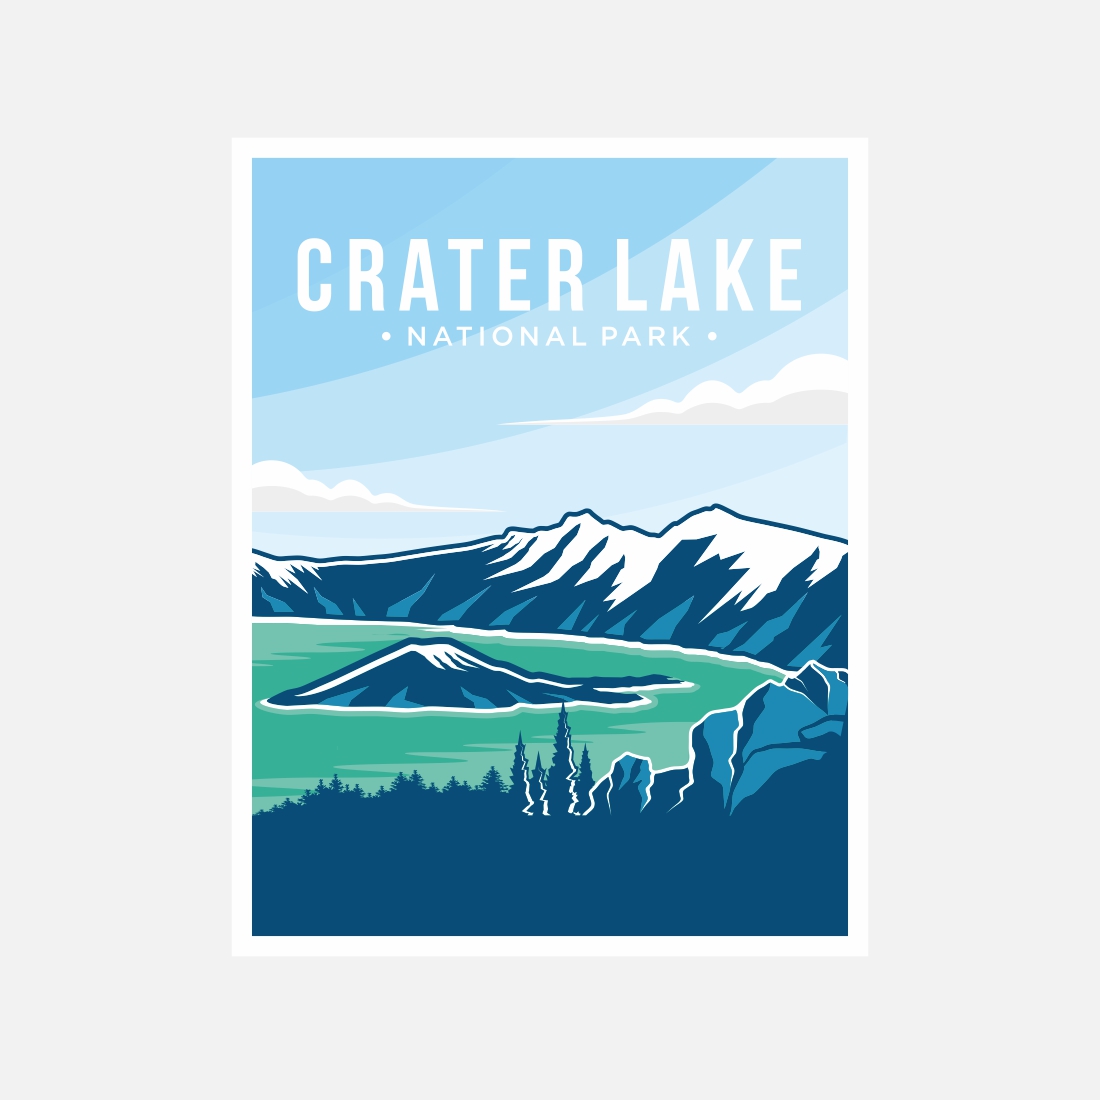 Crater Lake National Park Poster Vector Illustration Design – Only $10 cover image.